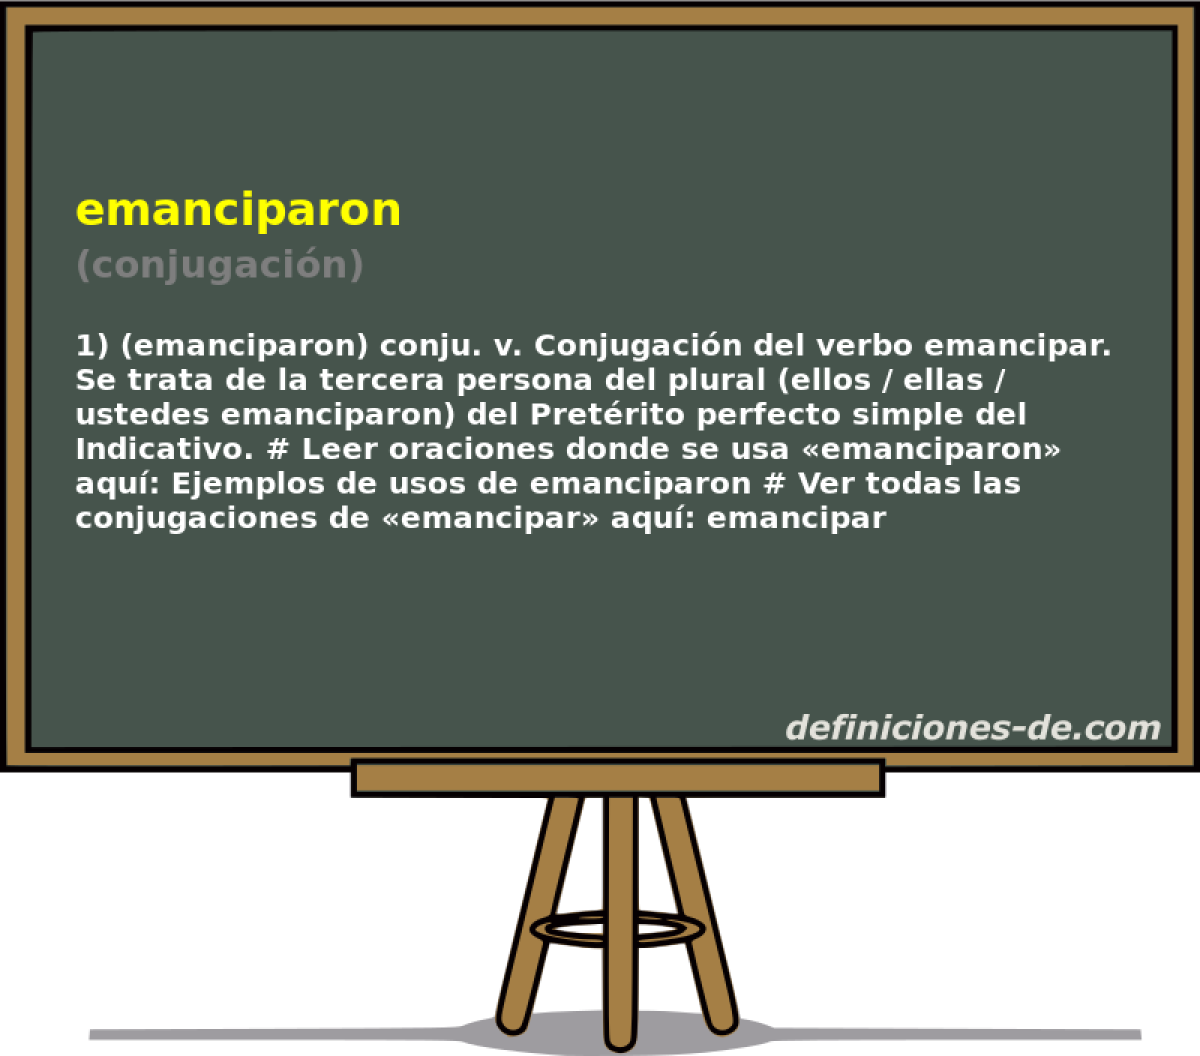 emanciparon (conjugacin)